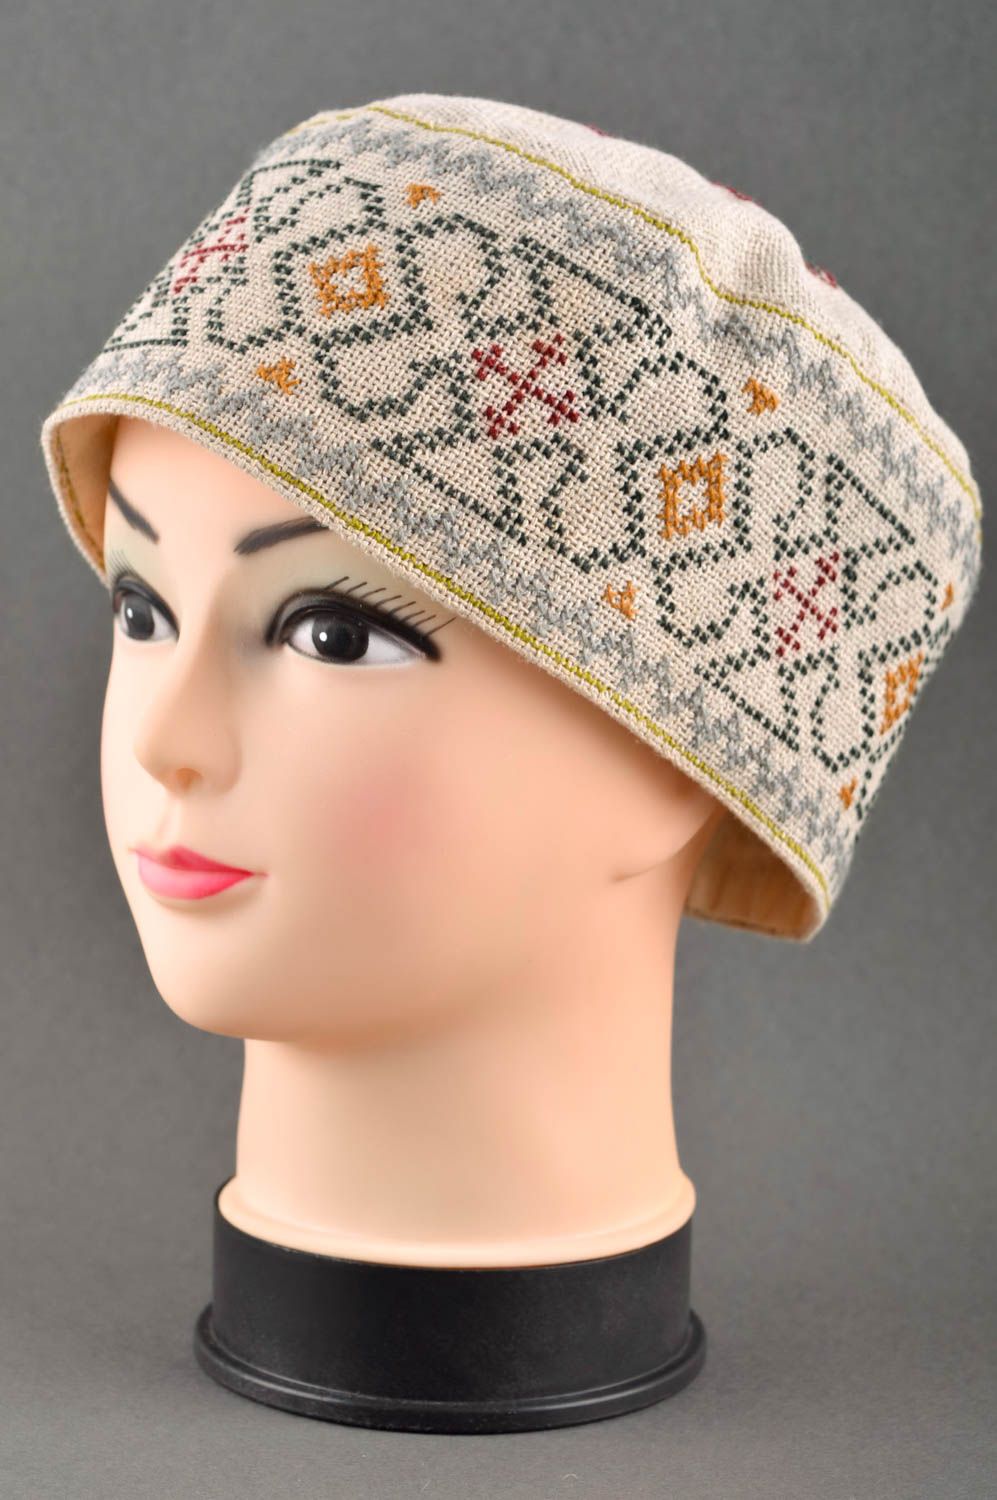 Embroidered hat handmade ethnic hat men accessories folk hats for men photo 1